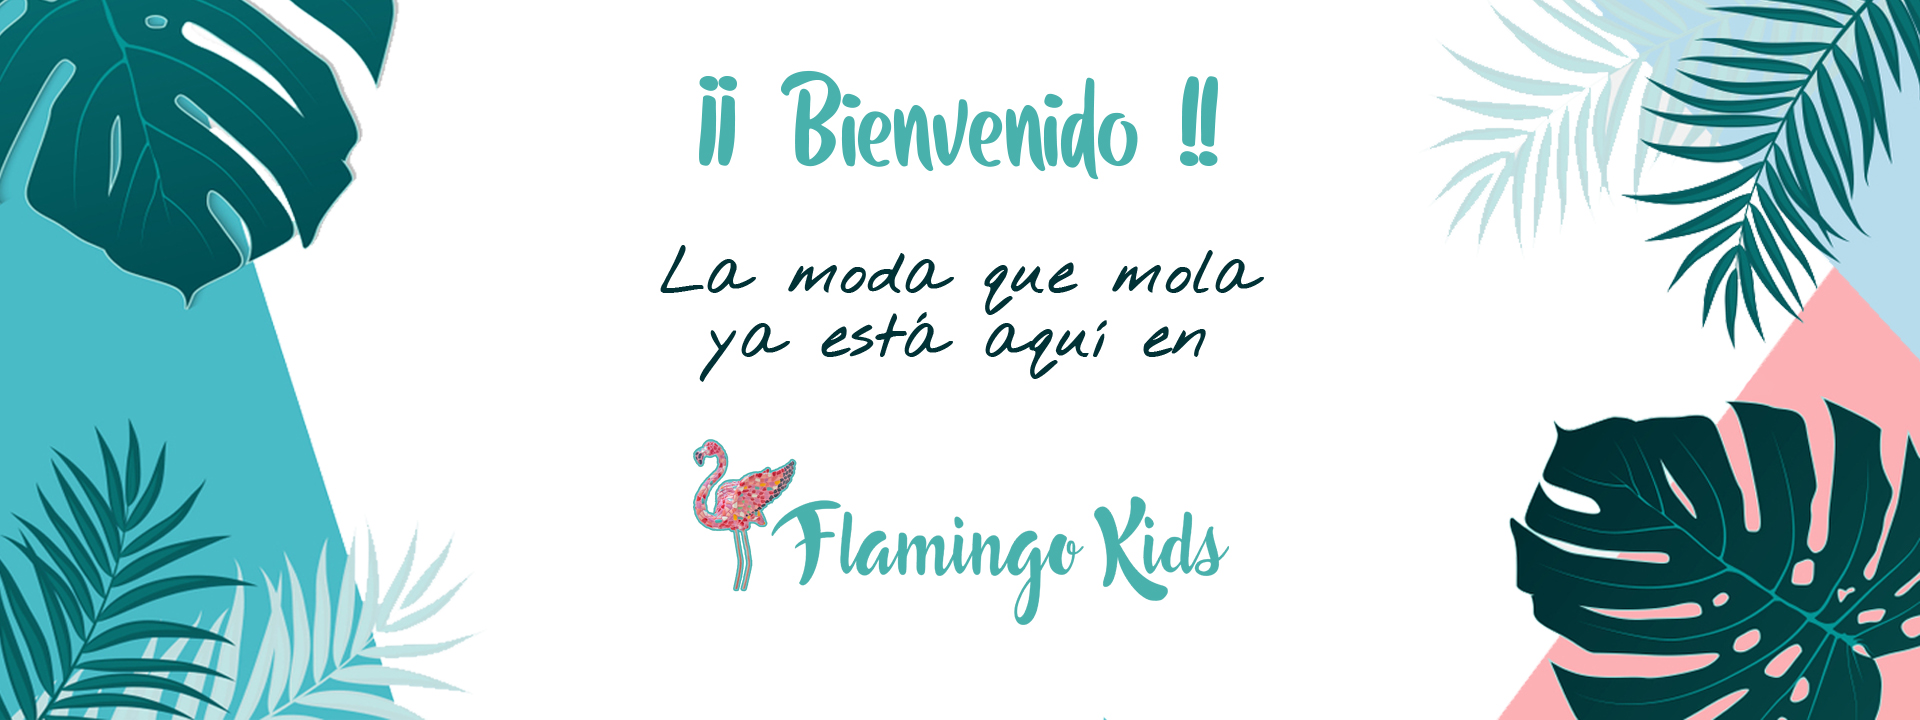 banner_flamingo_kids_prueba_1